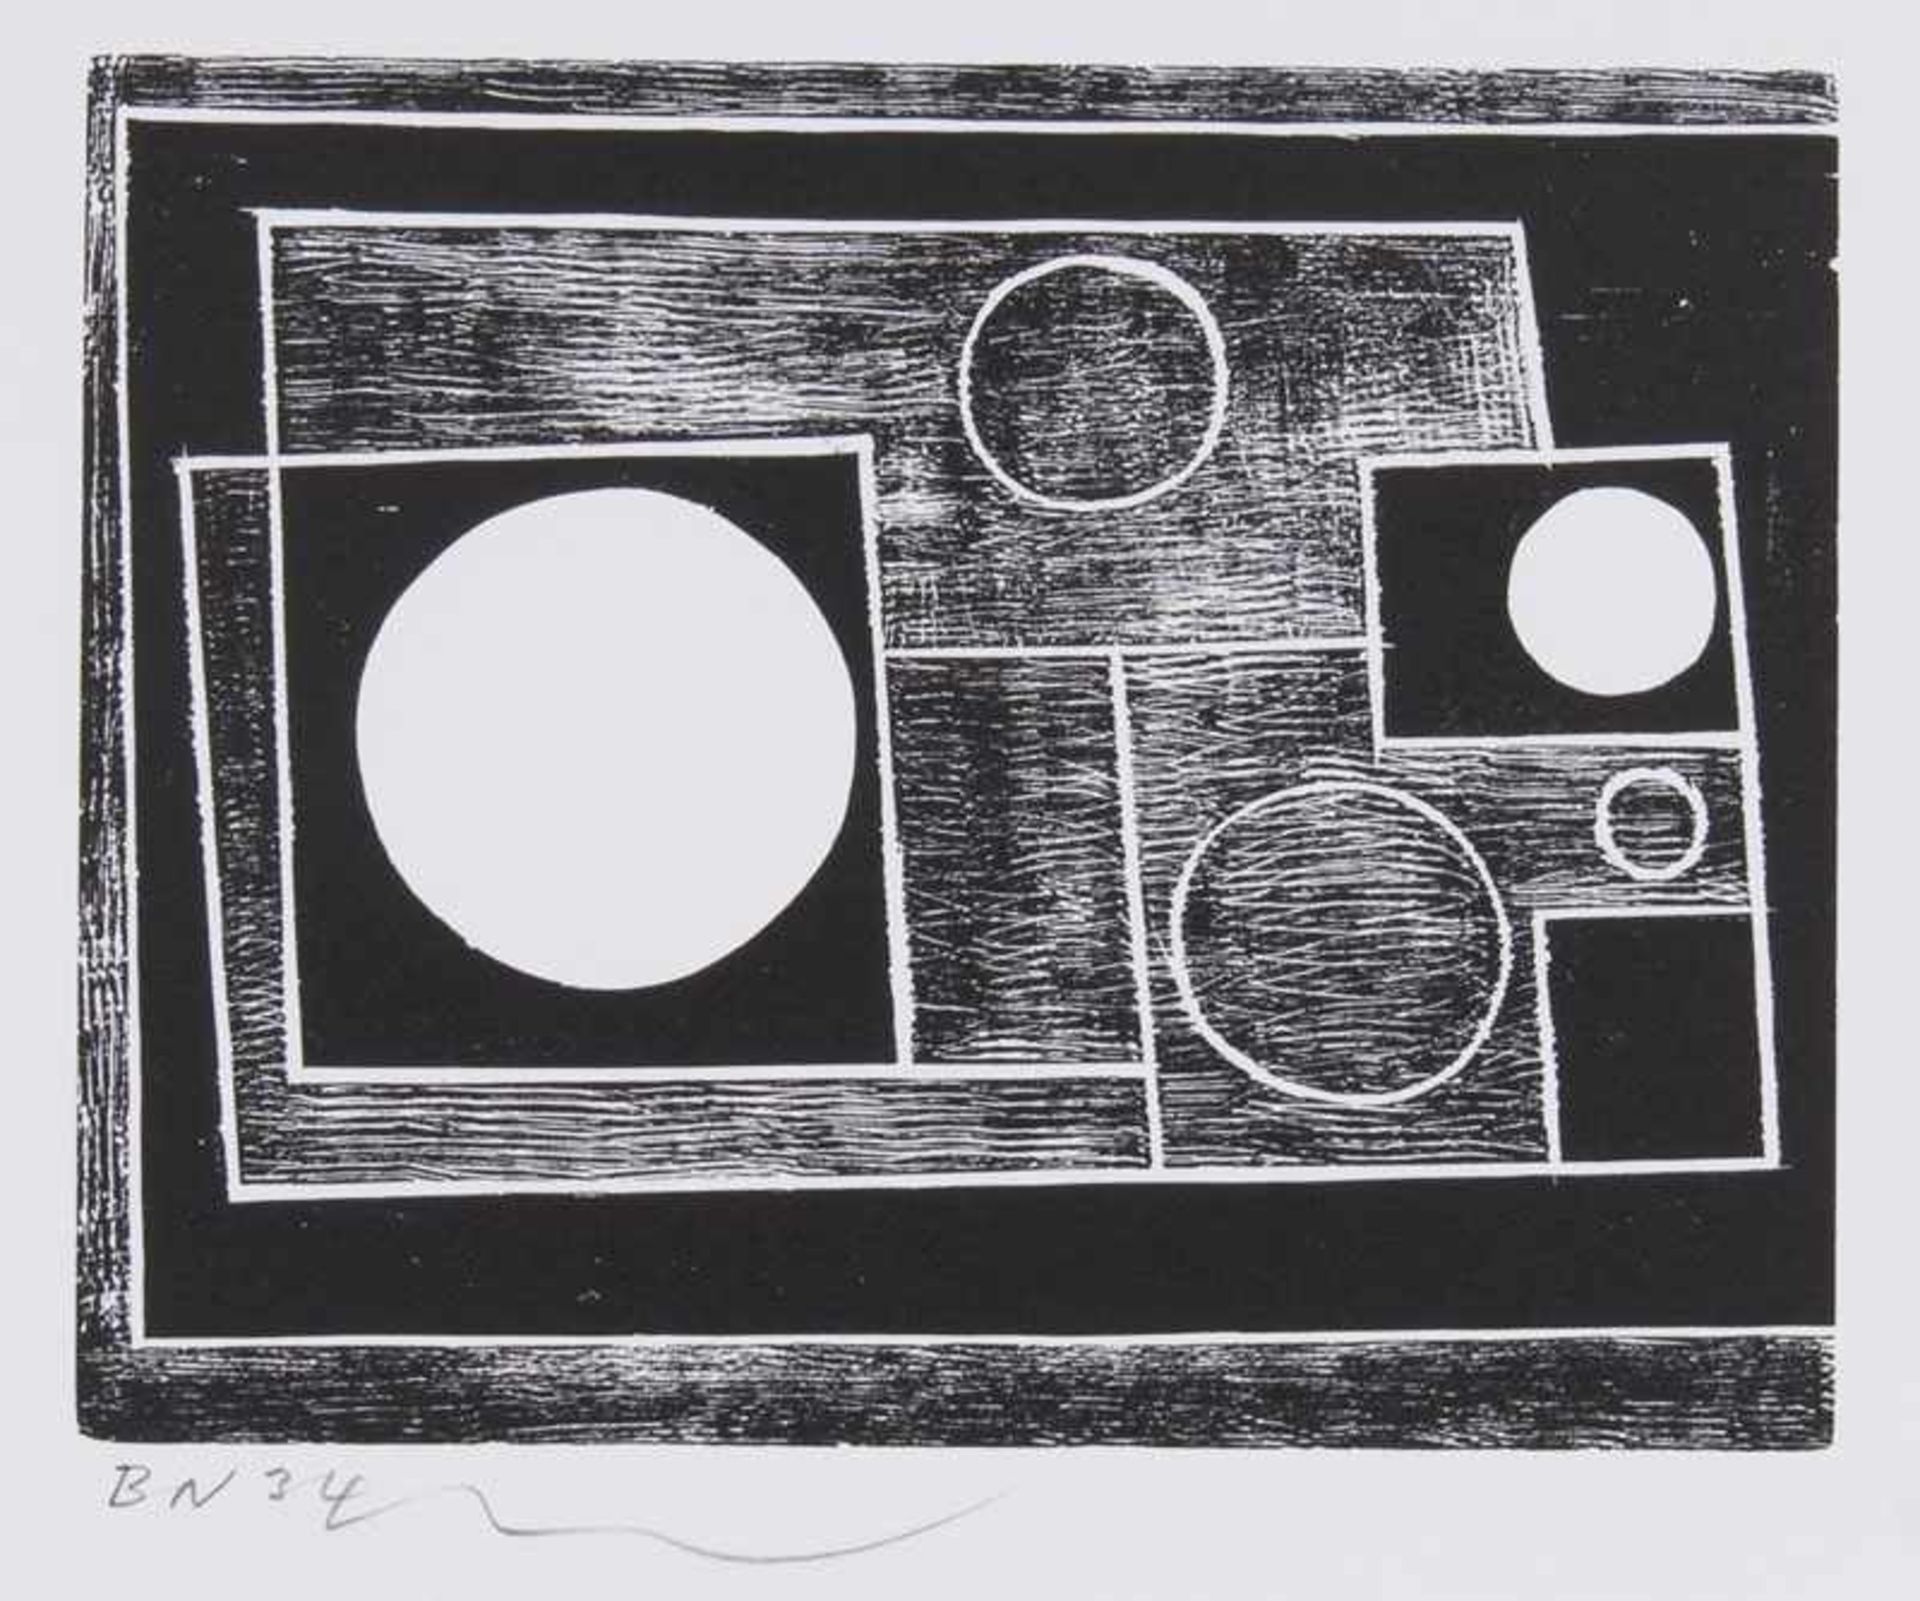 Ben Nicholson (Denham 1894 - London 1982) Five Circles 1962, Holzschnitt, 15,5 x 20 cm, l. u. mit